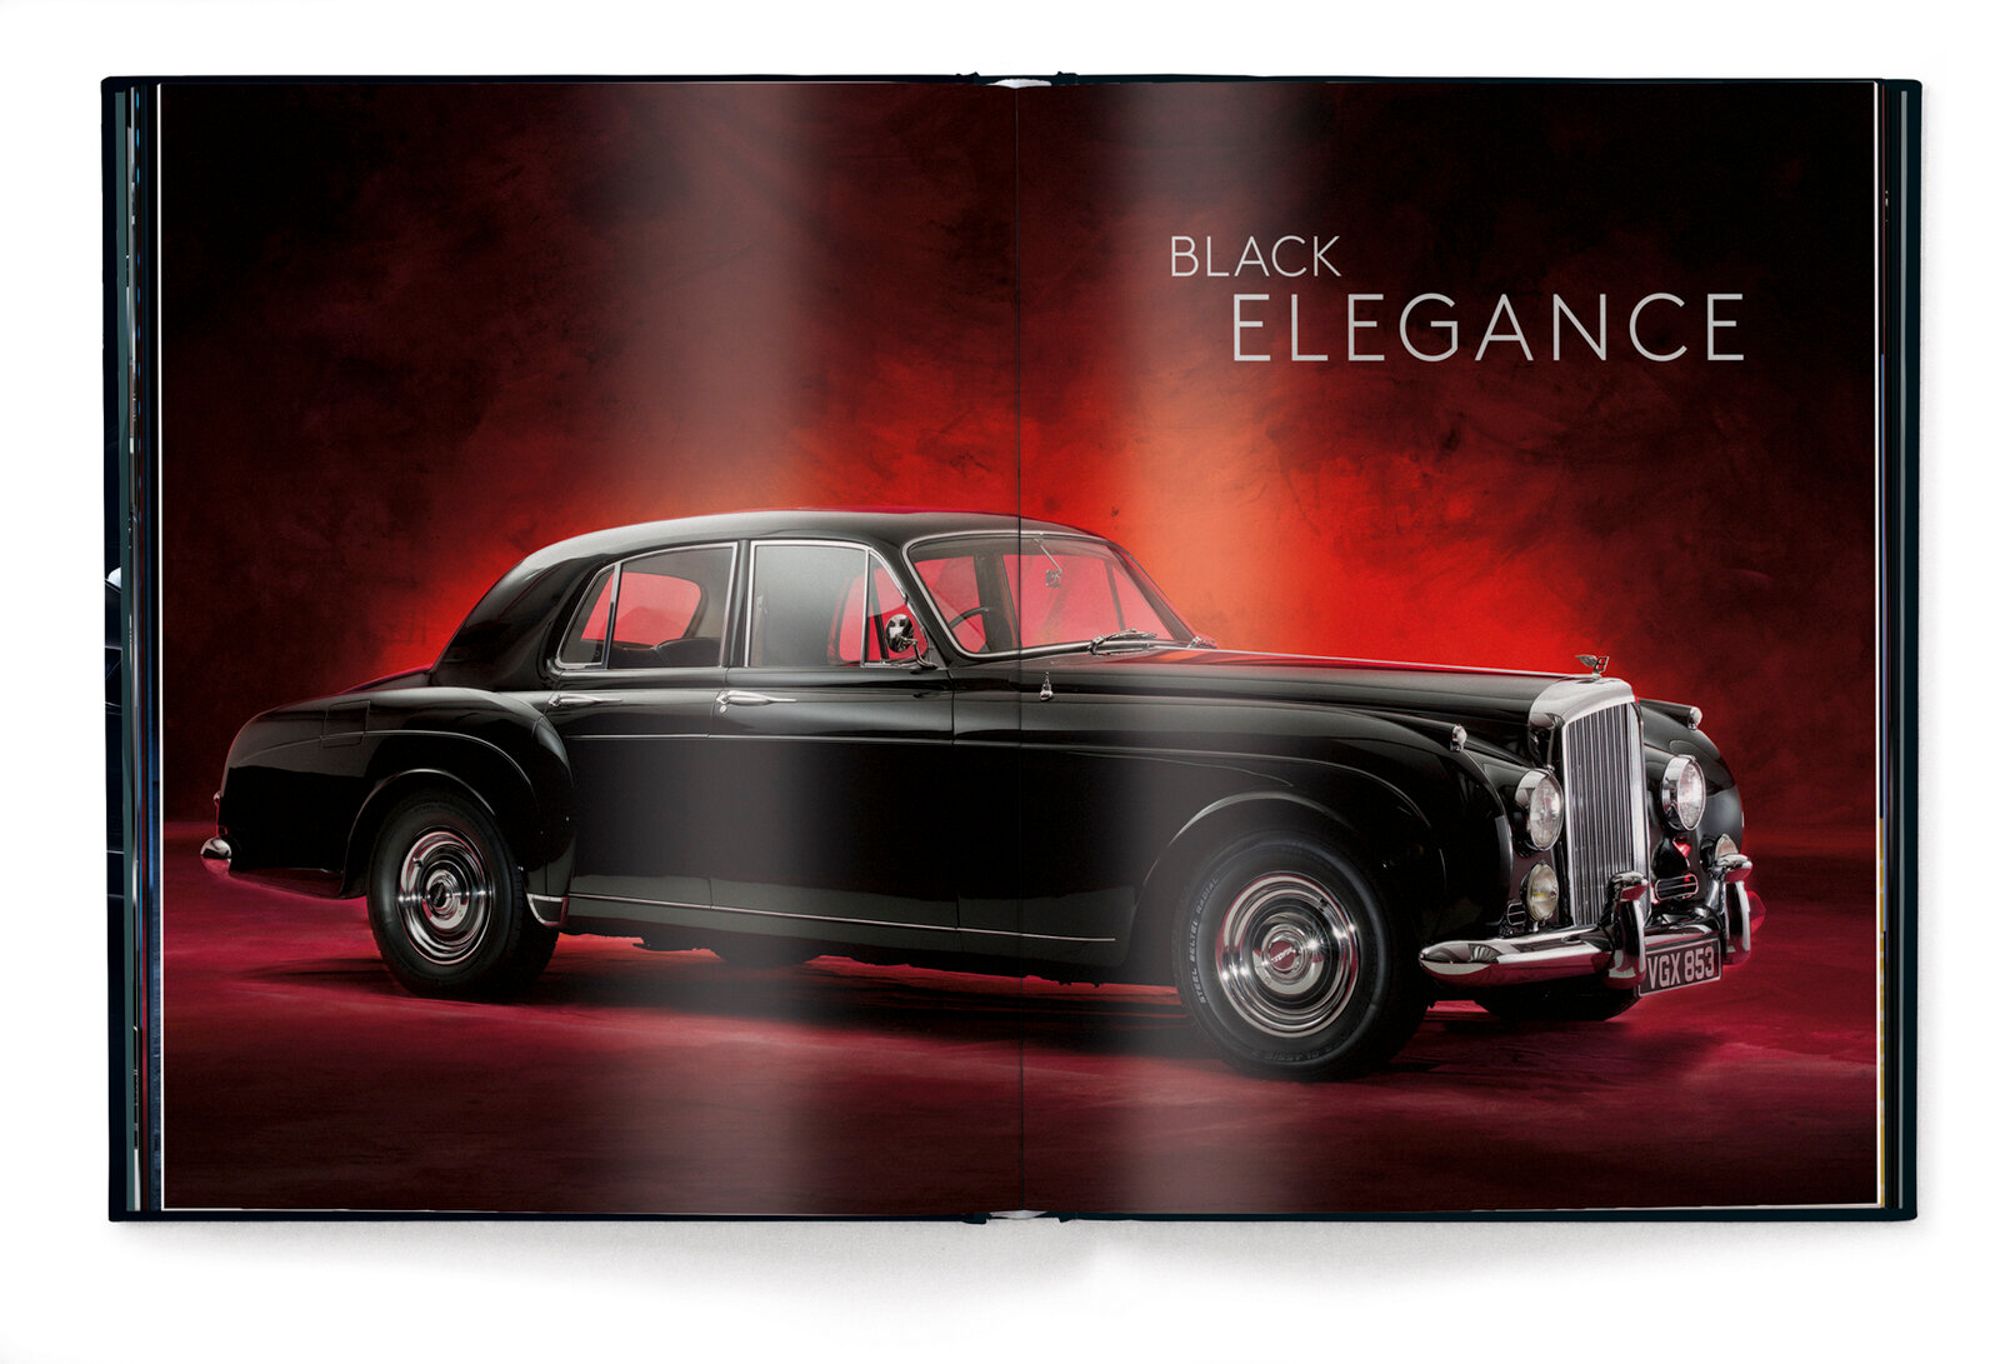 teNeues Black Beauties, Iconic Cars NVT 092188-001-0